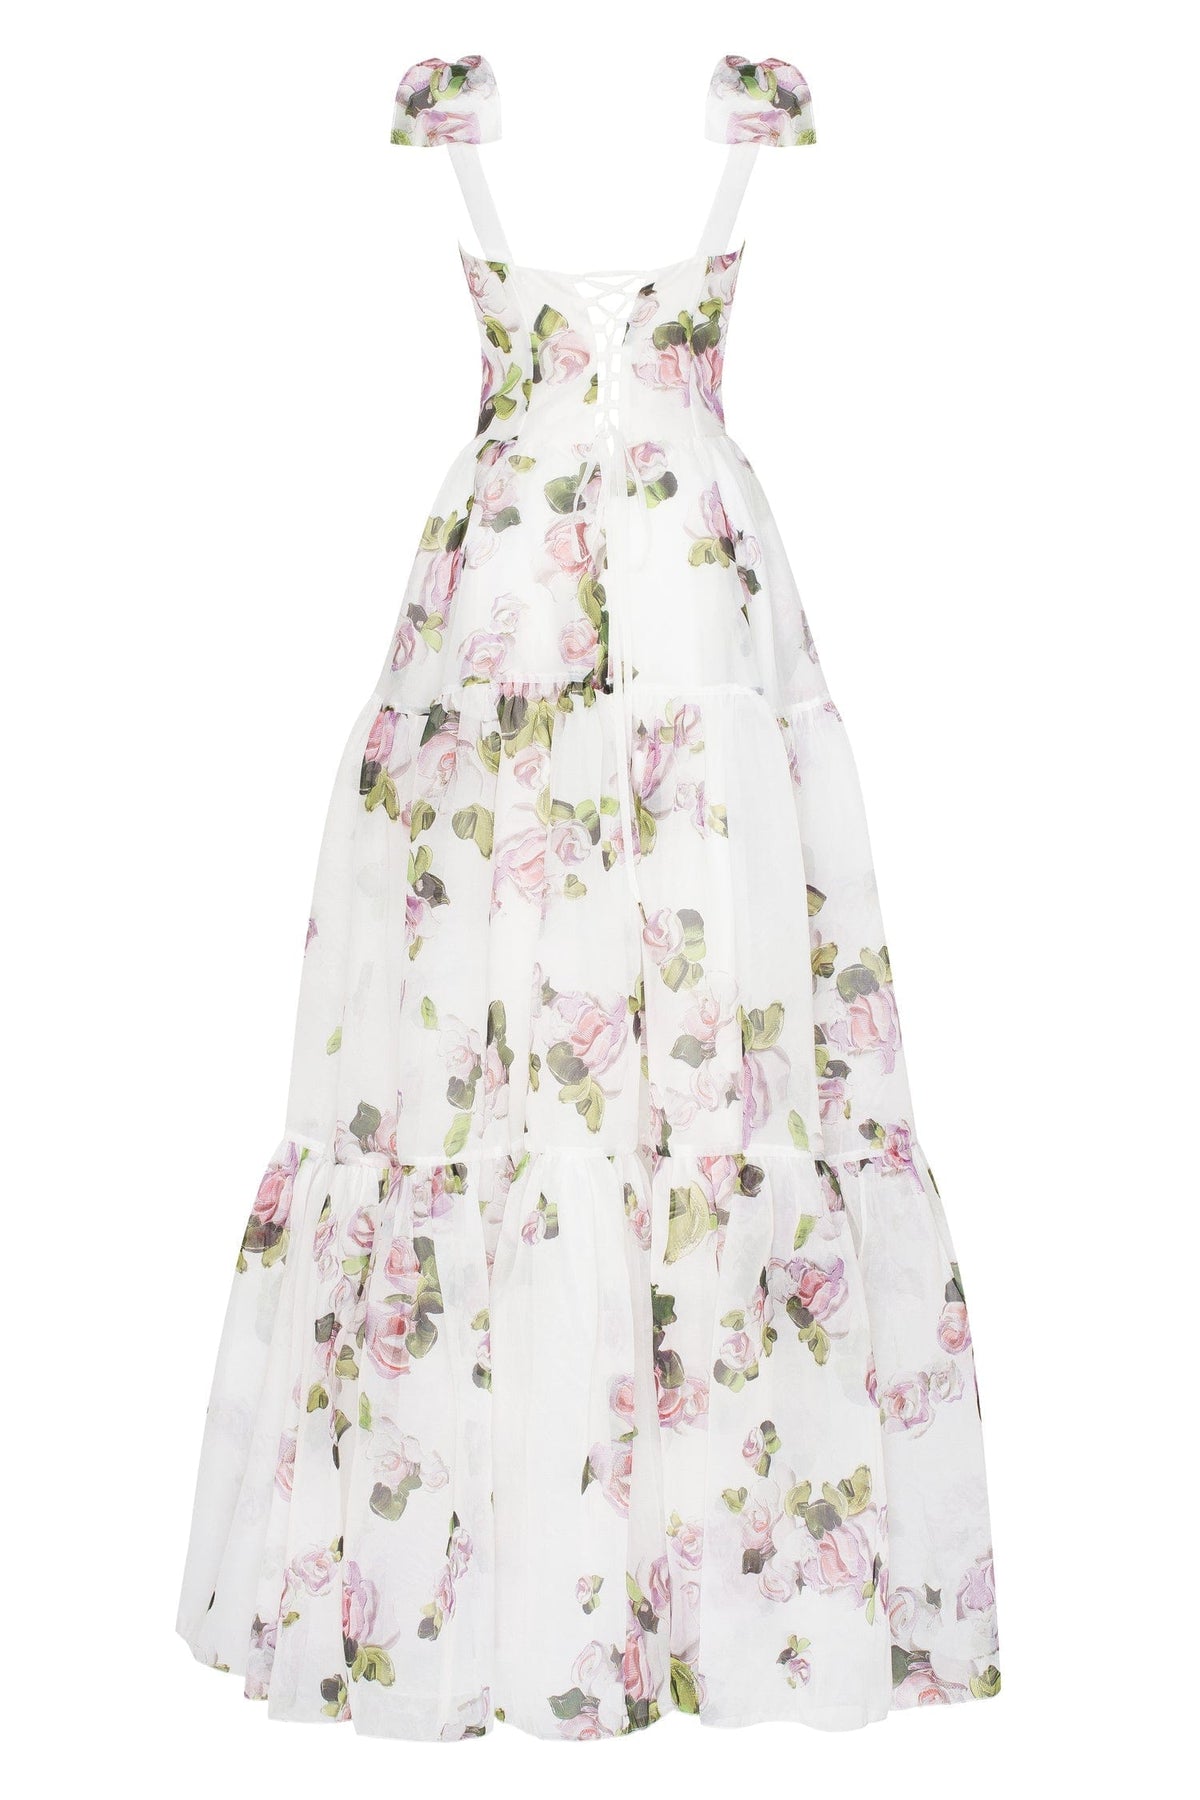 Apple Blossom Tender floral maxi tie-strap dress Milla Dresses - USA ...